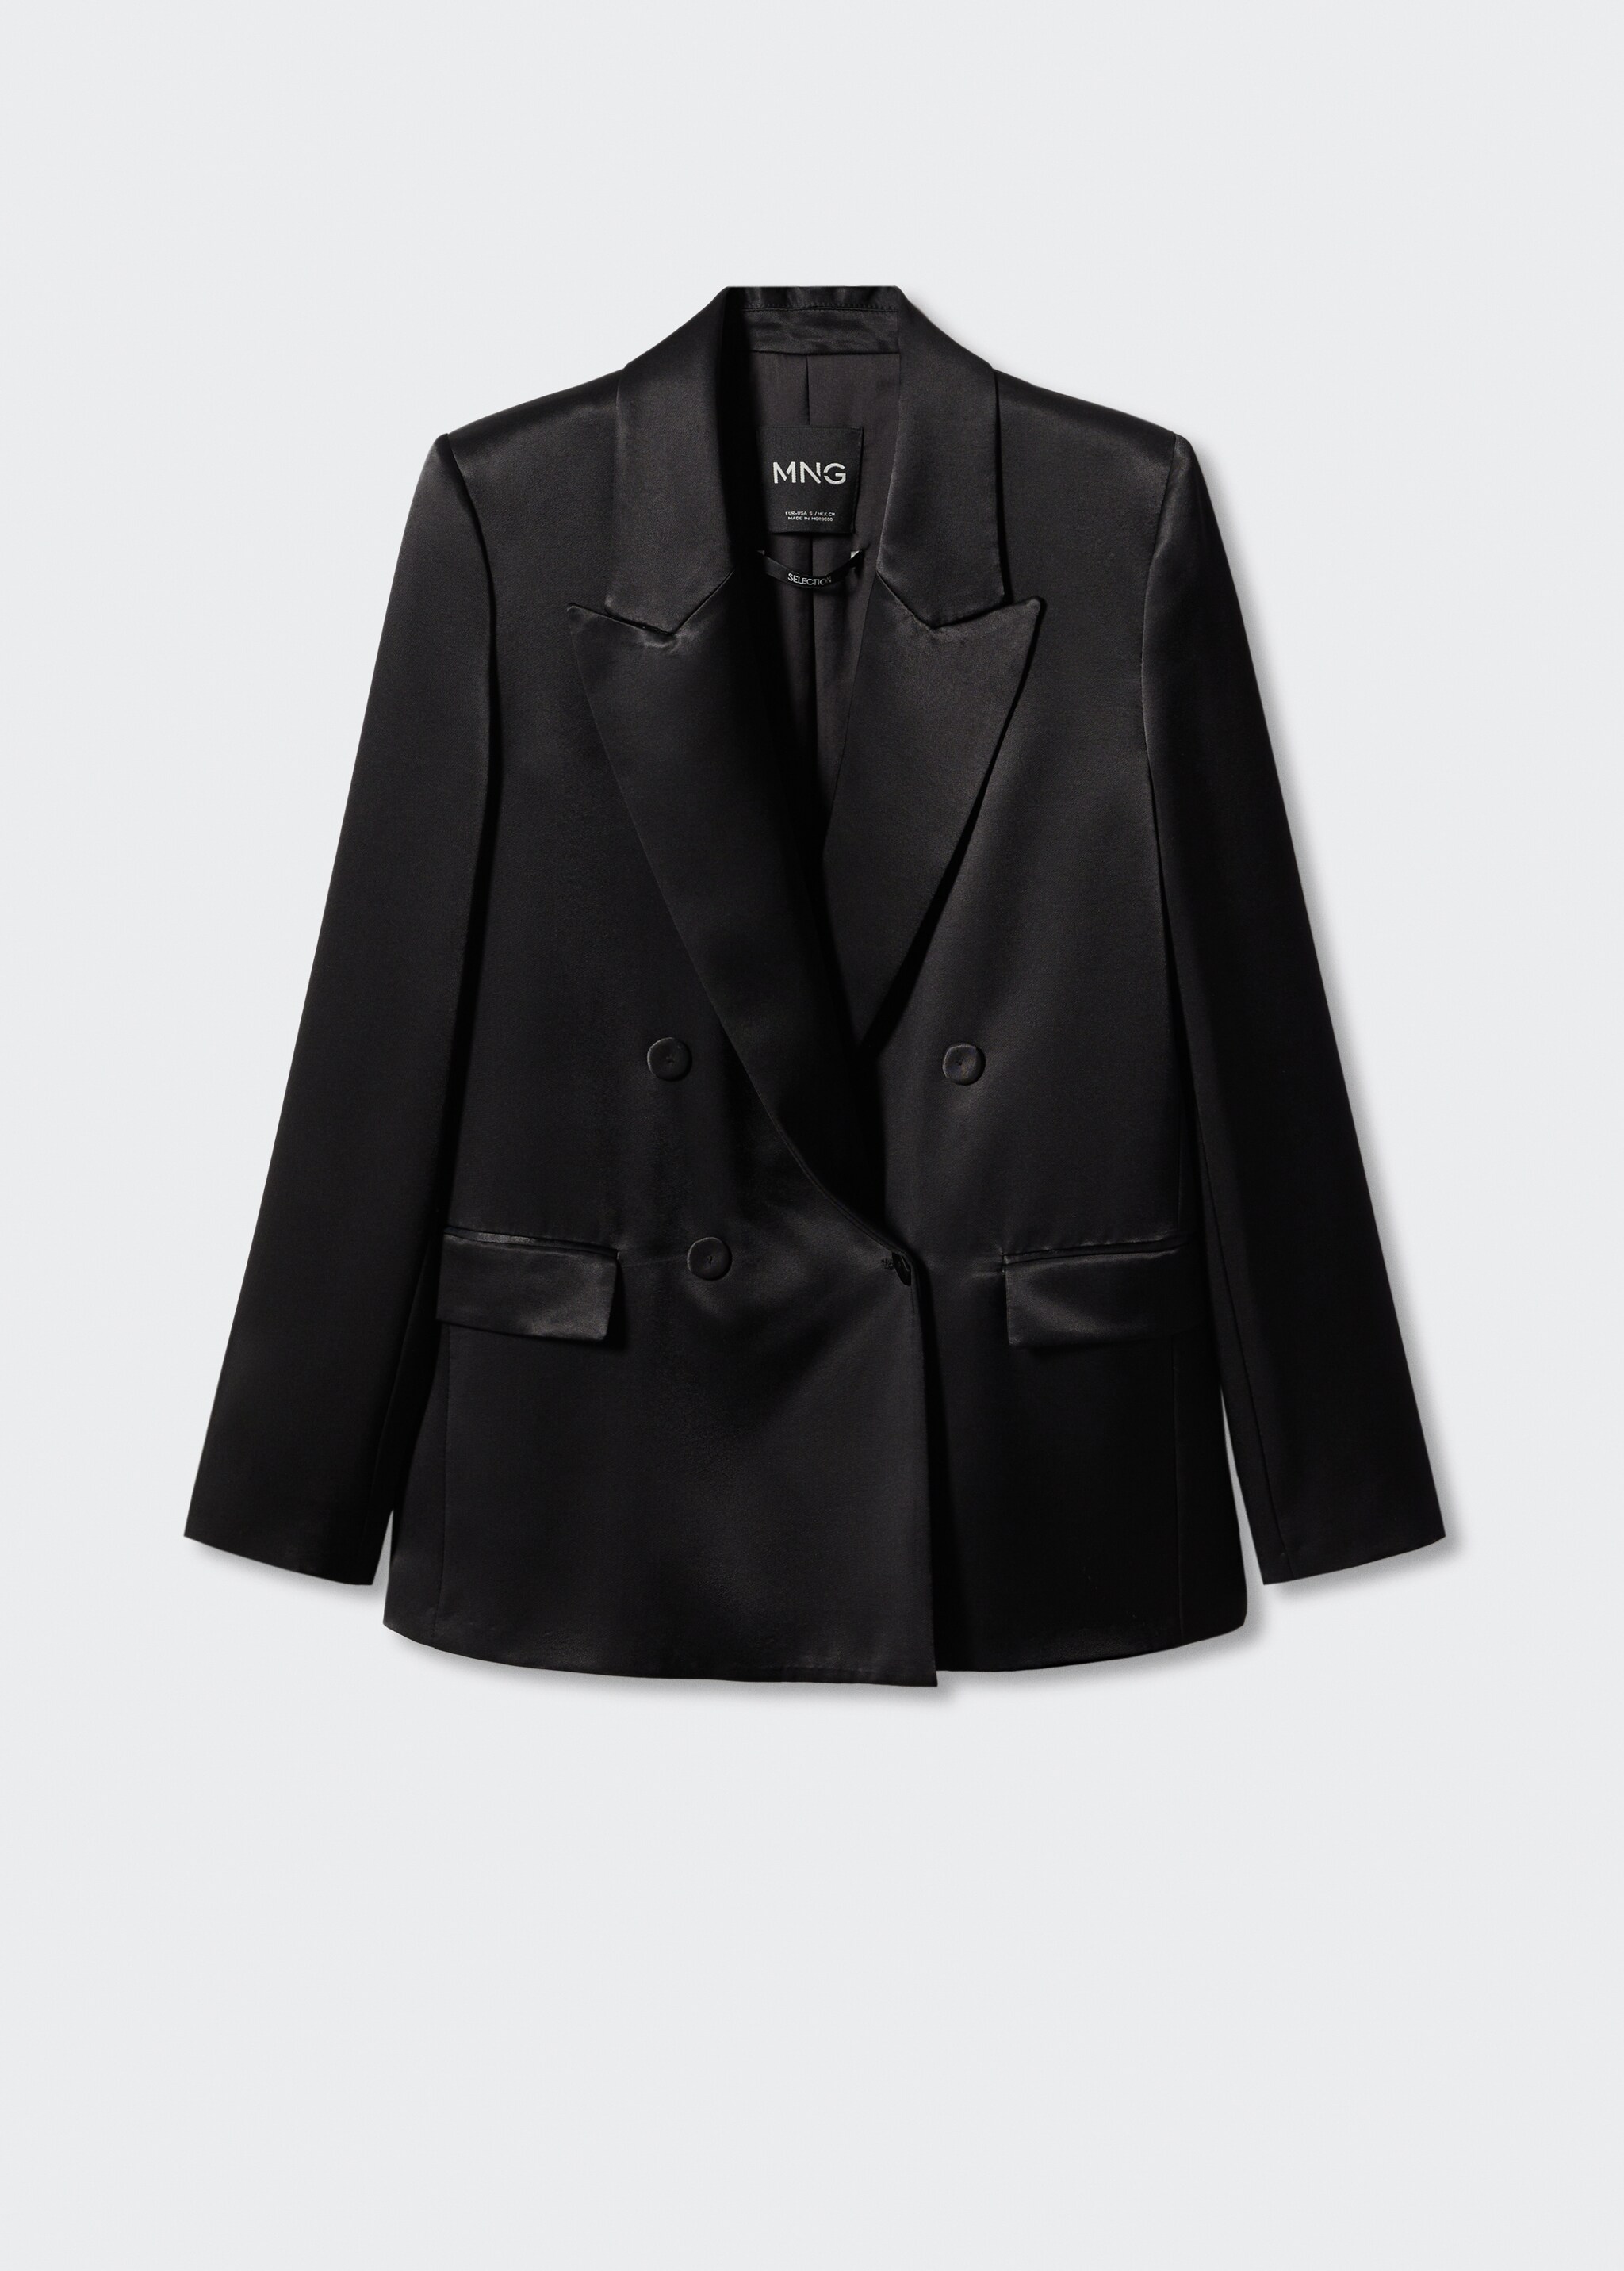 Satin-finish suit jacket - Article without model